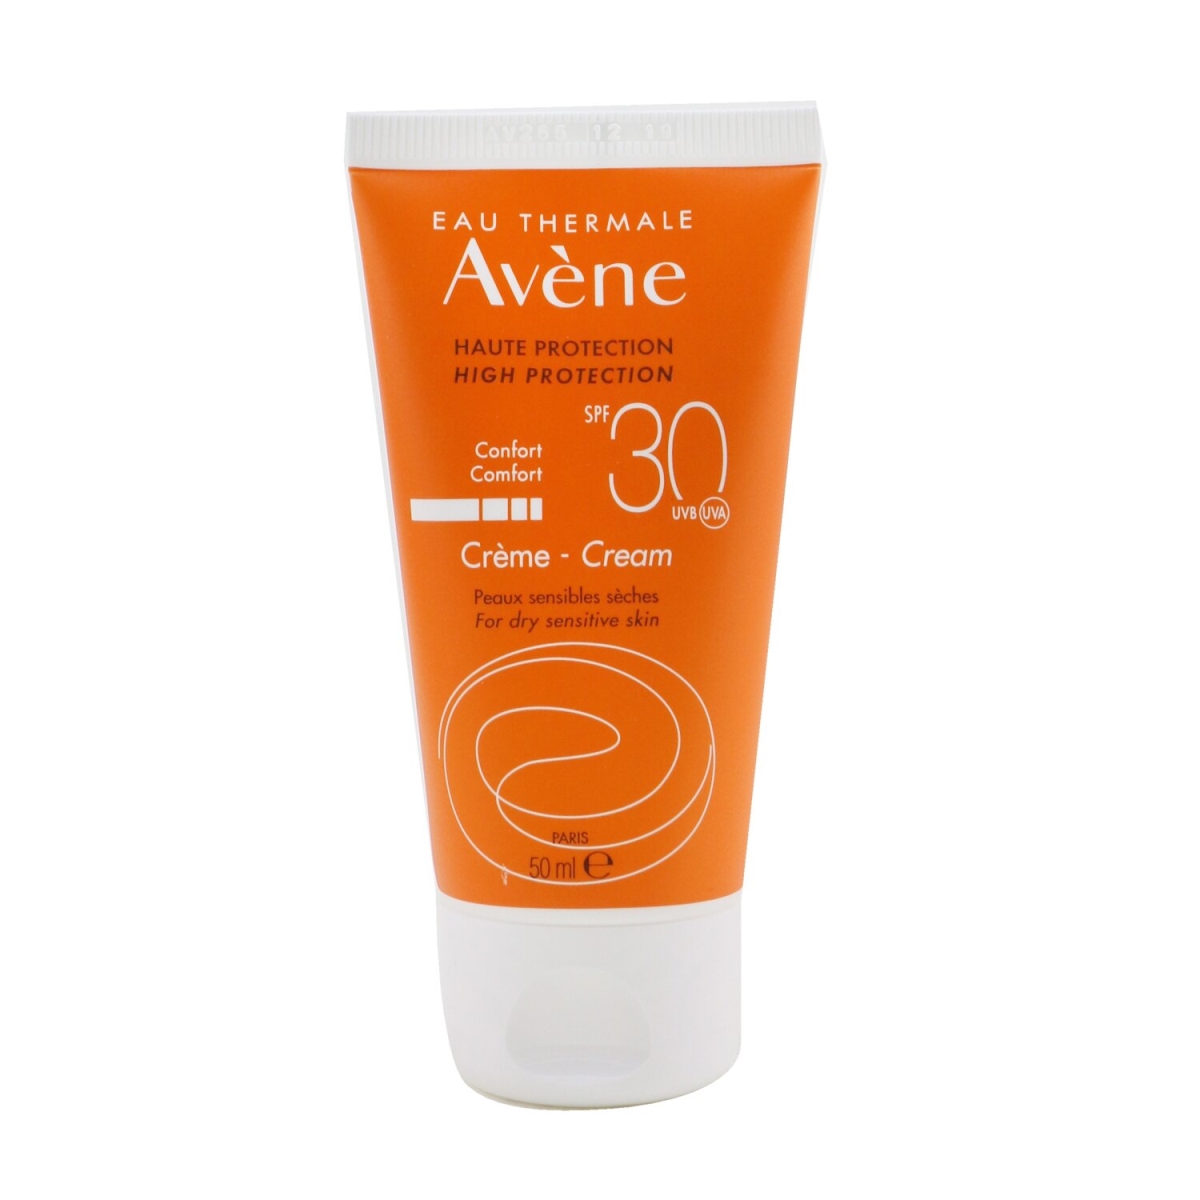 Picture of Avene 259818 1.7 oz High Protection Comfort Cream SPF 30 for Dry Sensitive Skin